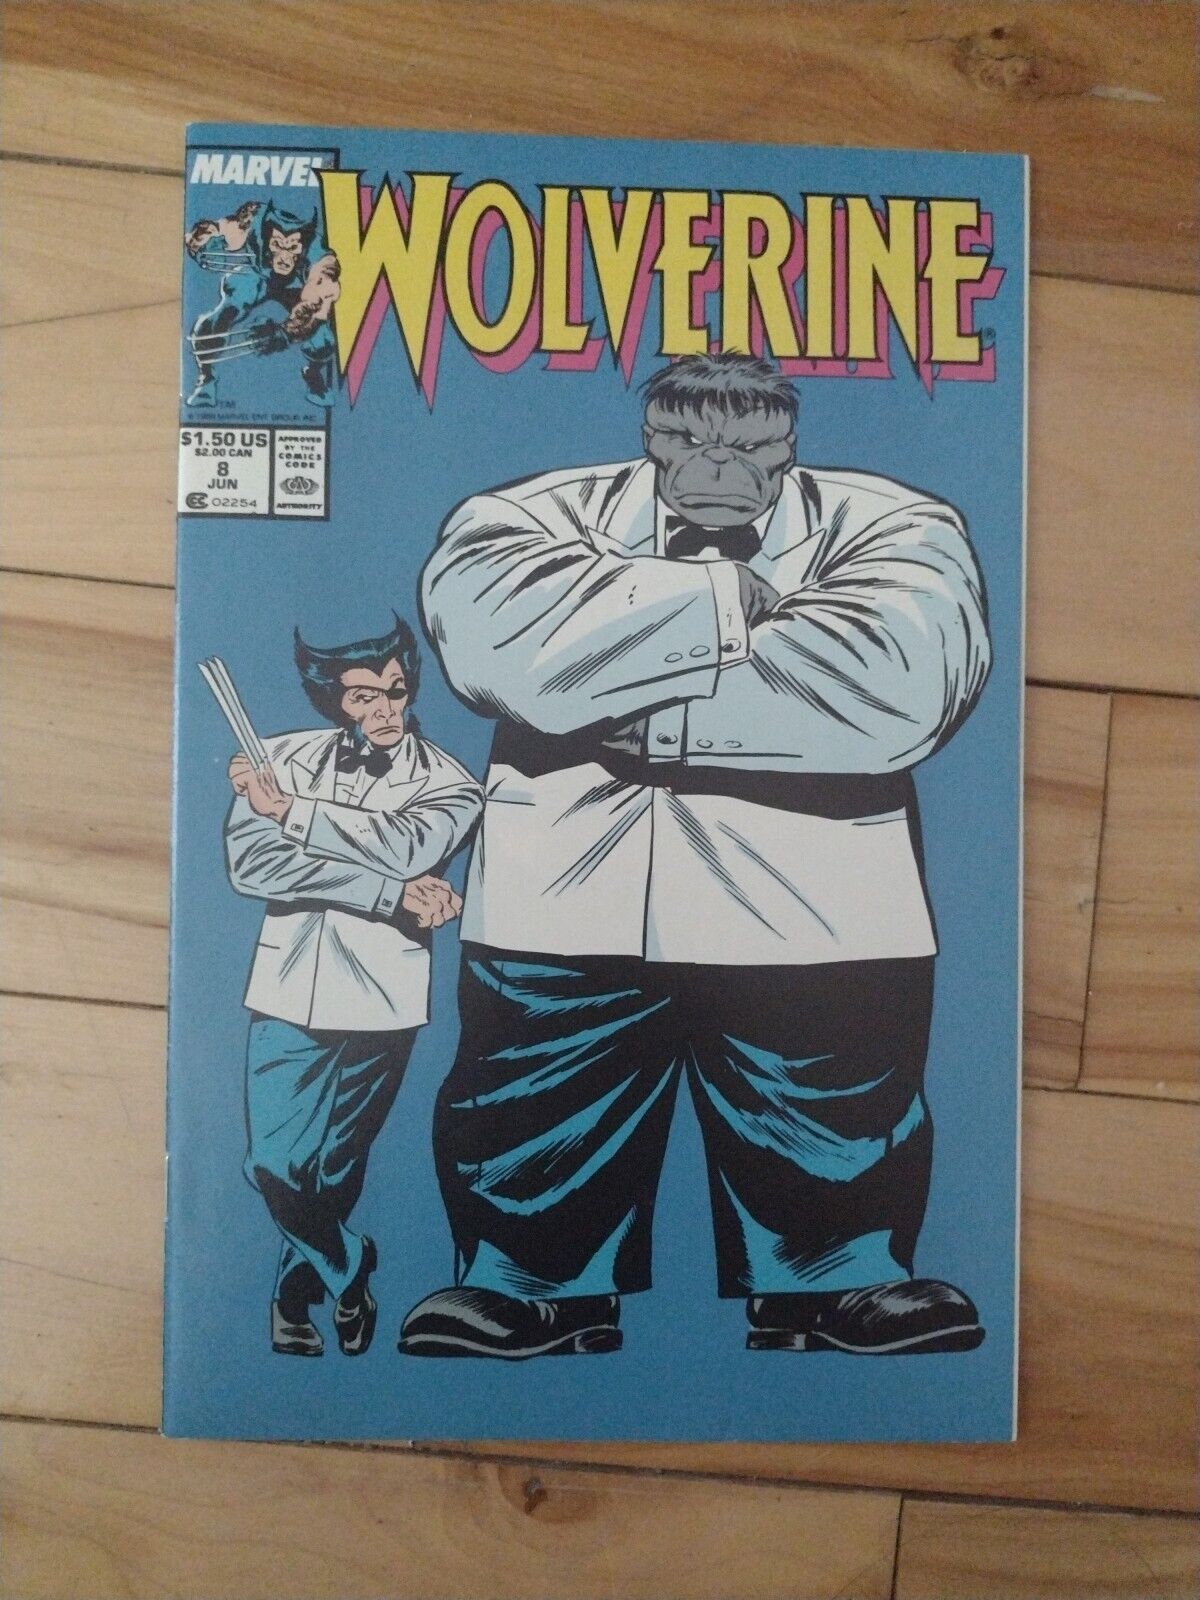 Wolverine #1 & #8 Marvel Comics 1989 Classic Grey Hulk Joe Fixit Buscema Cover